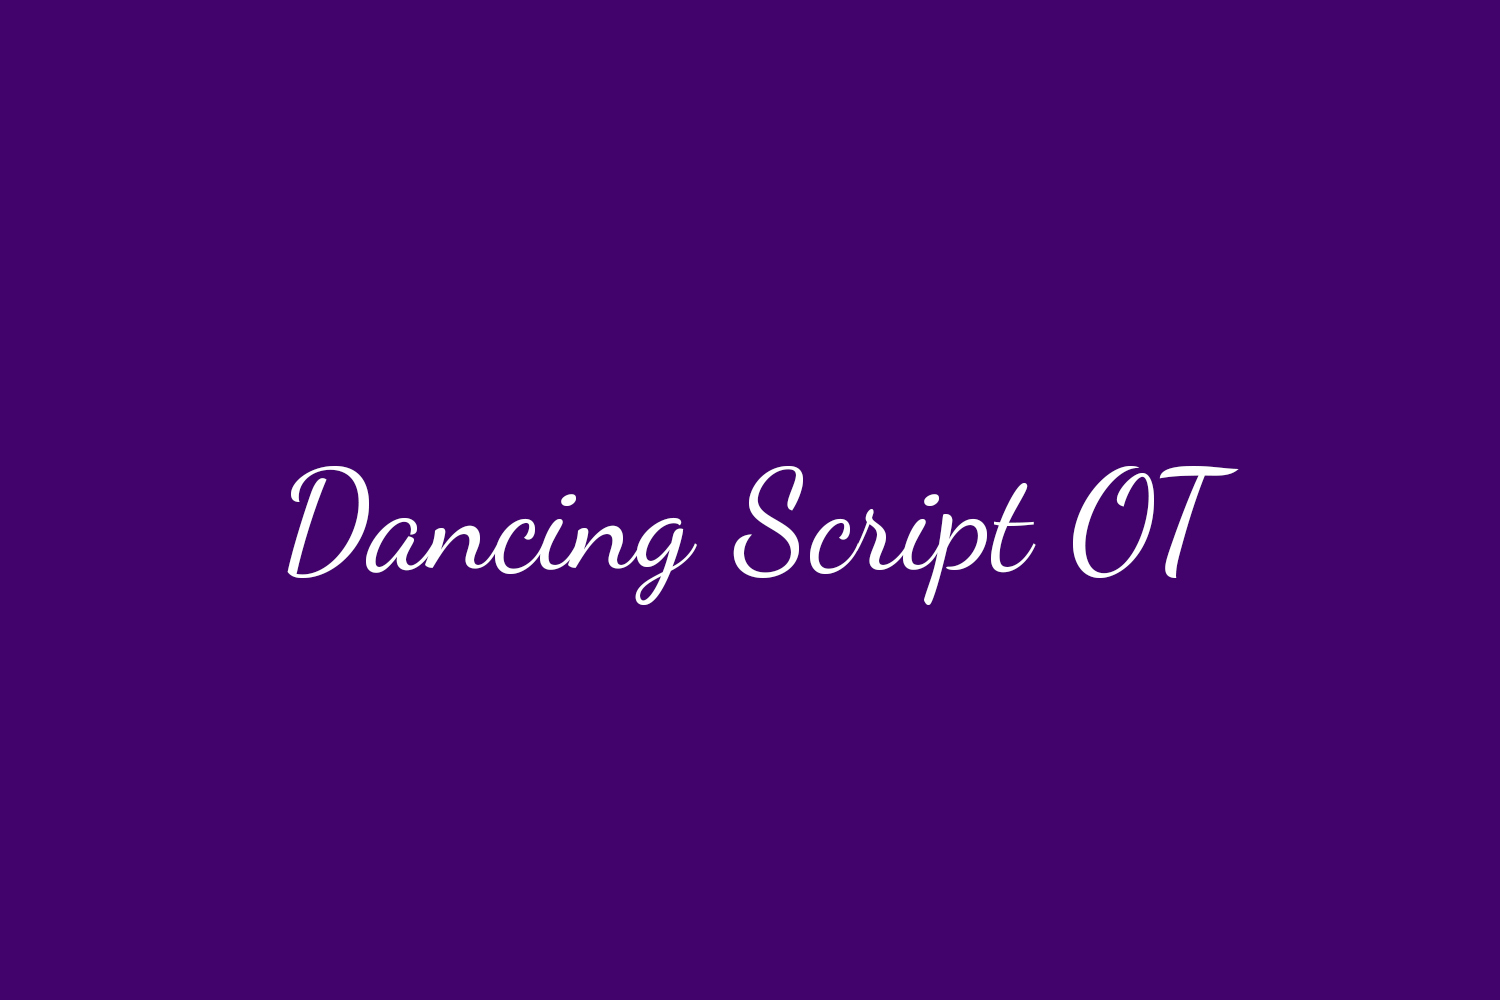 Dancing Script OT